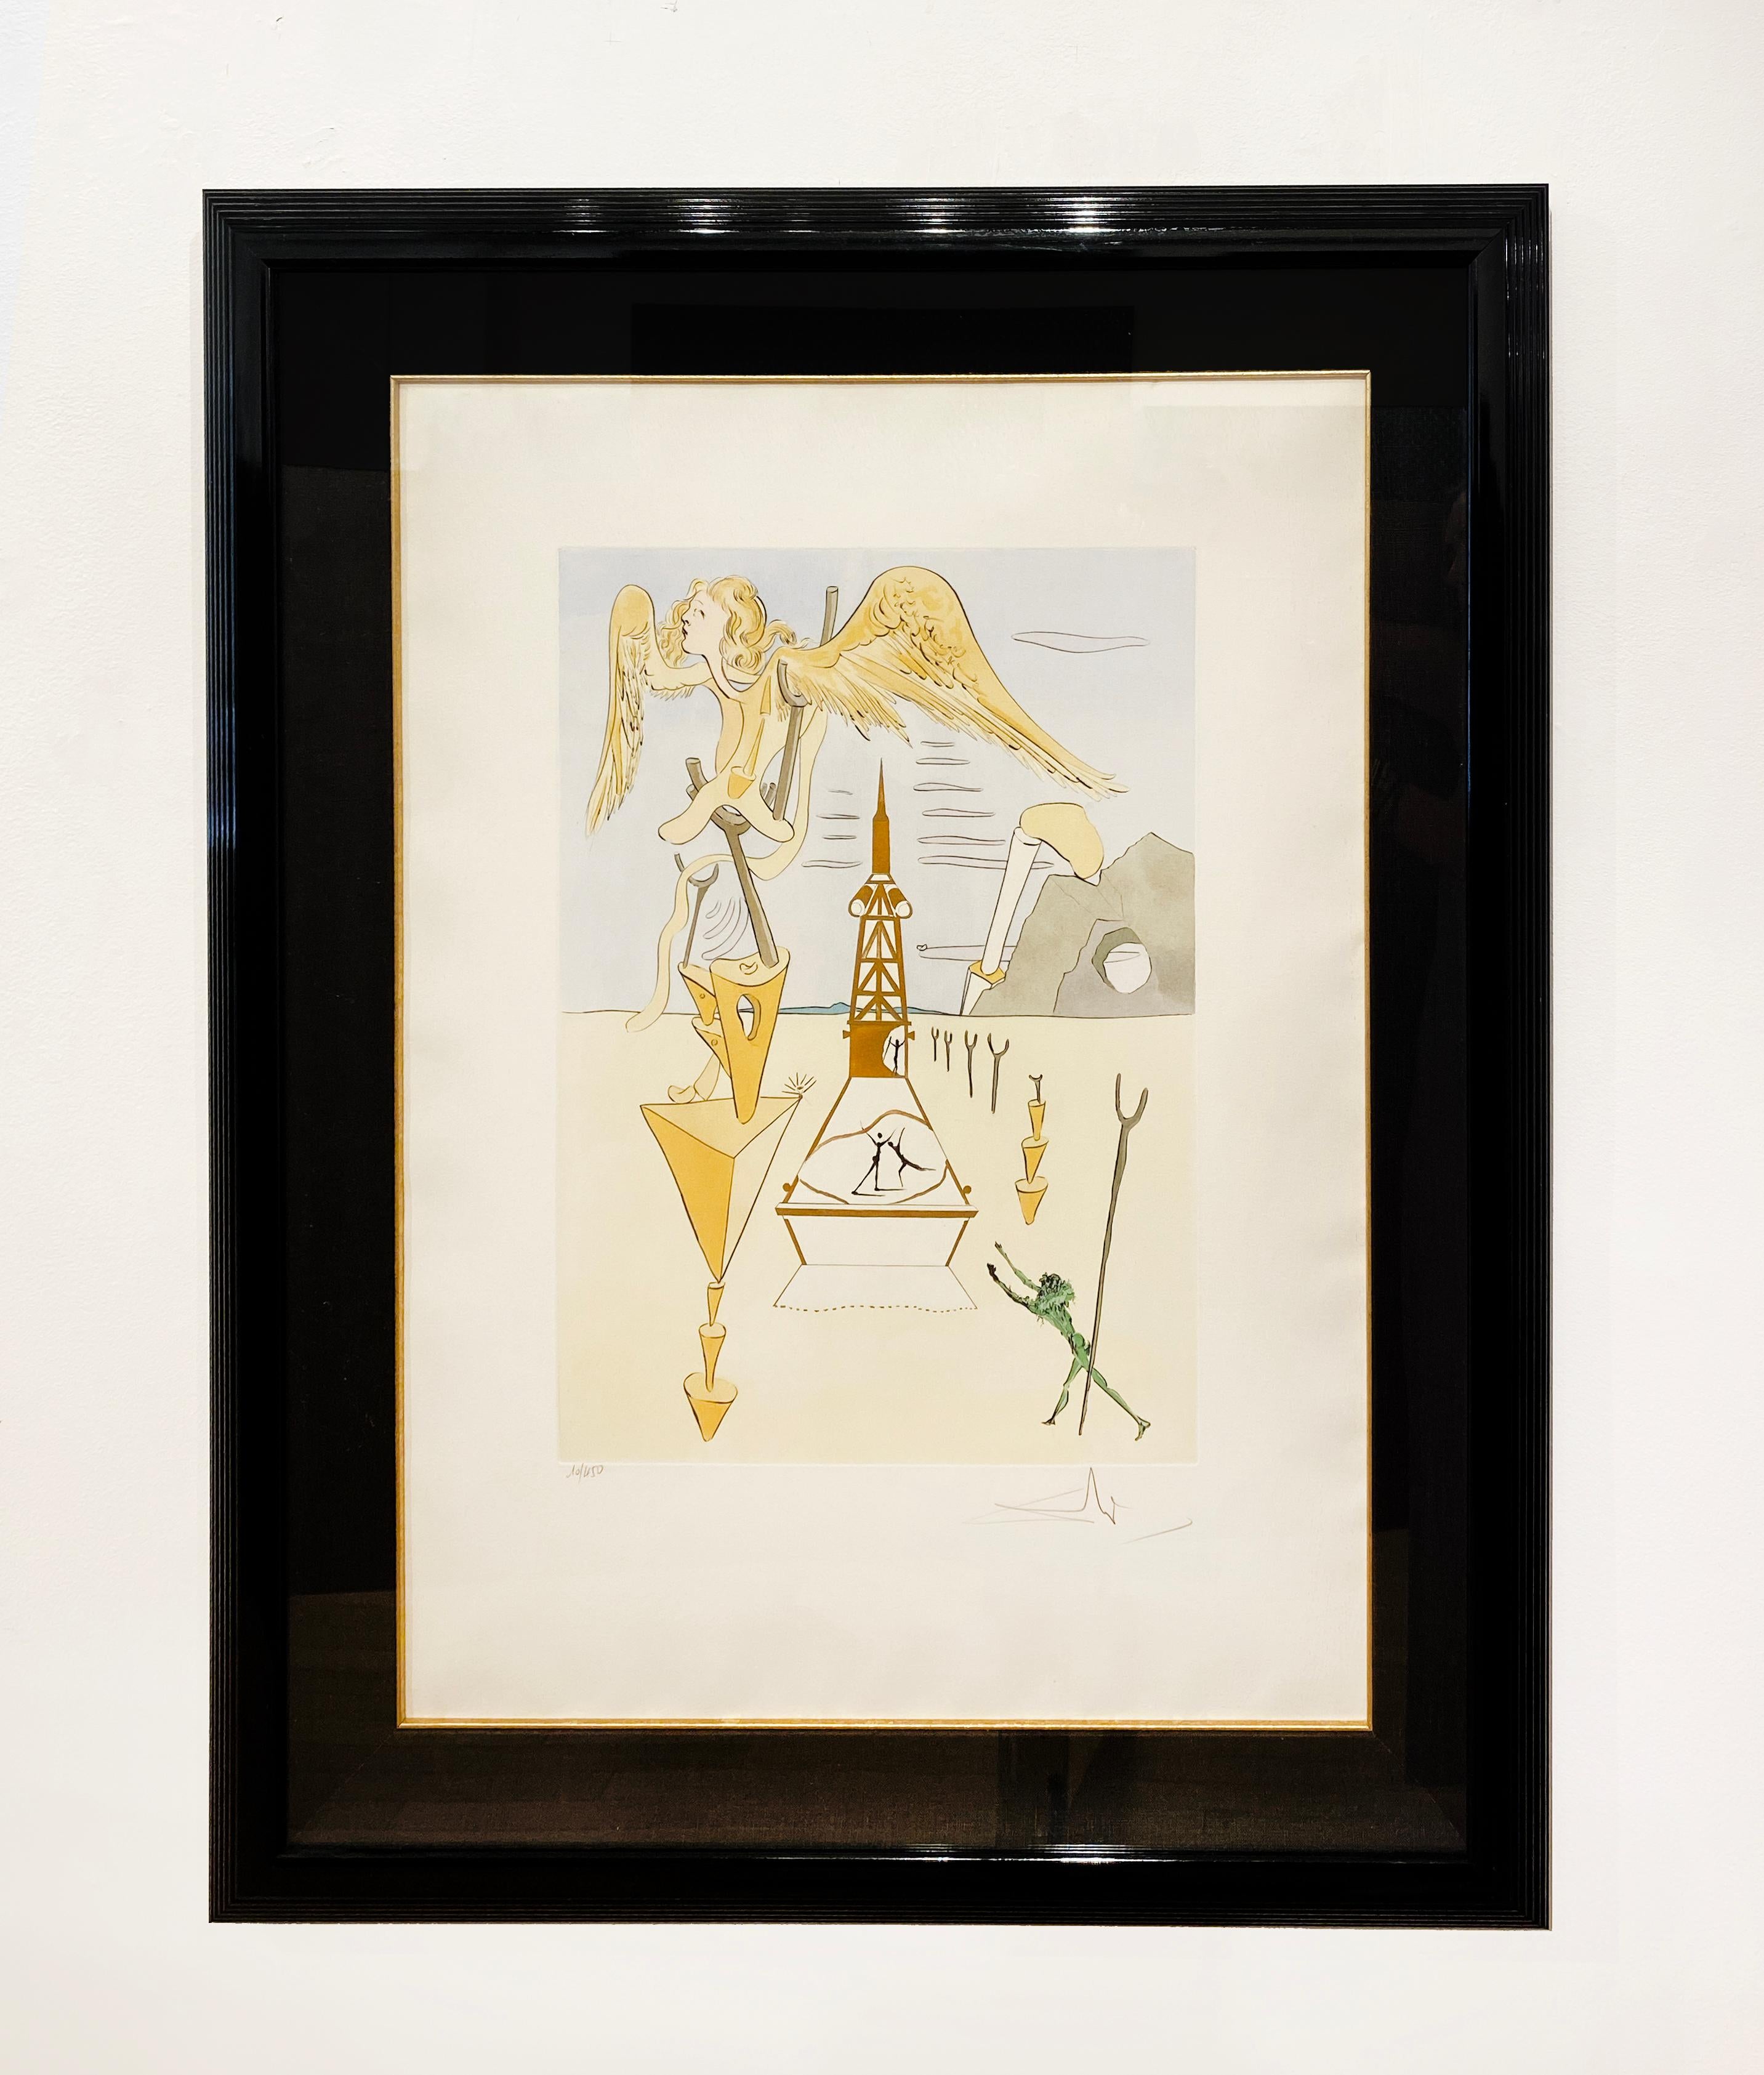 Artist:  Dali, Salvador
Title:  Rocket
Series:  Hommage a Leonardo da Vinci (Great Inventions)
Date:  1975
Medium:  drypoint engraving with stenciled color
Framed Dimensions:  37.5